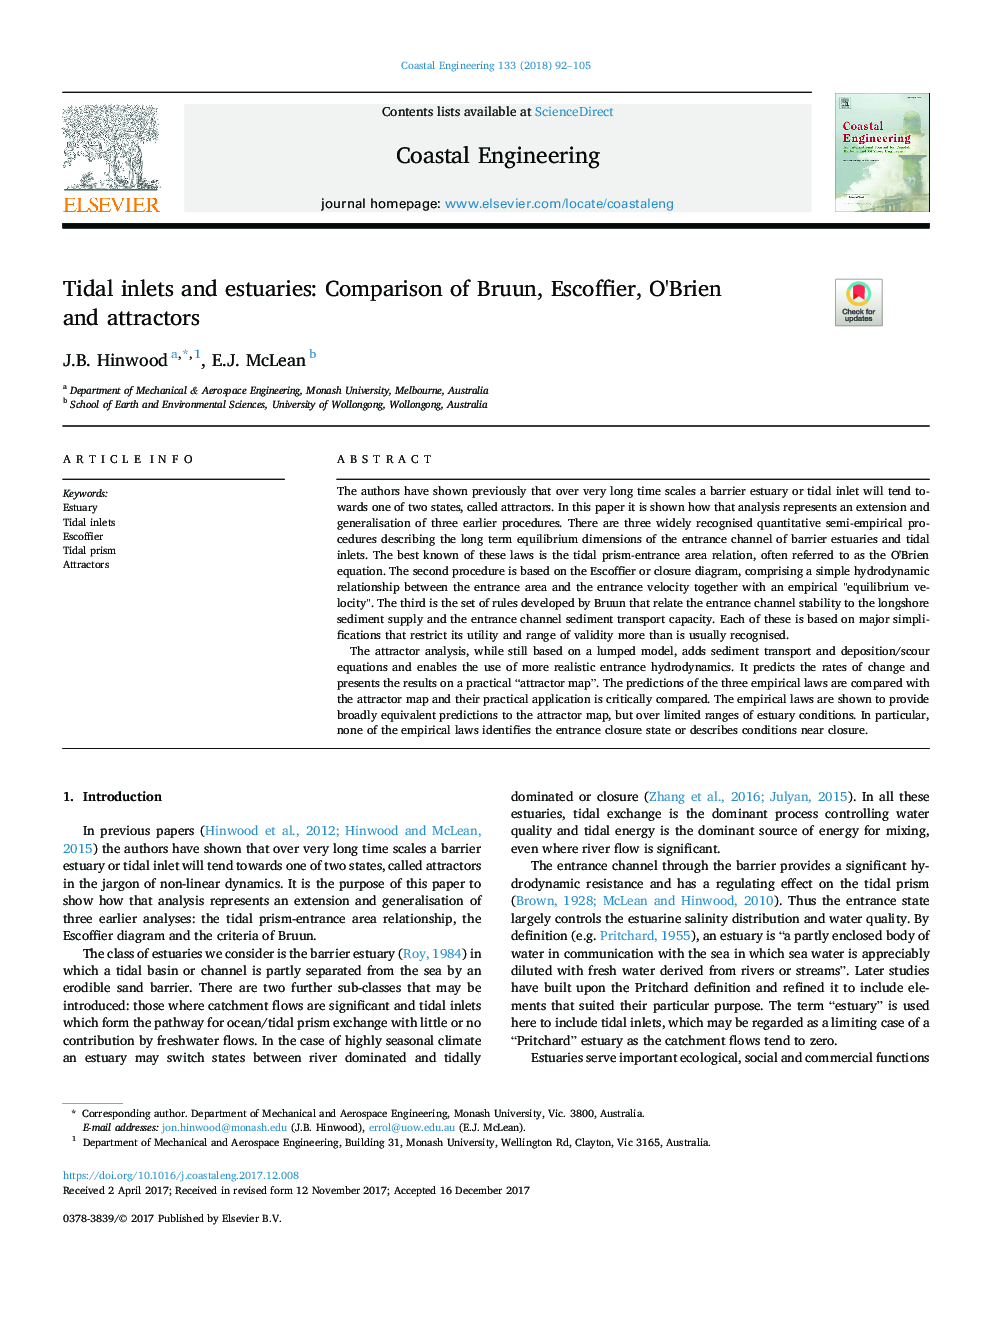 Tidal inlets and estuaries: Comparison of Bruun, Escoffier, O'Brien and attractors